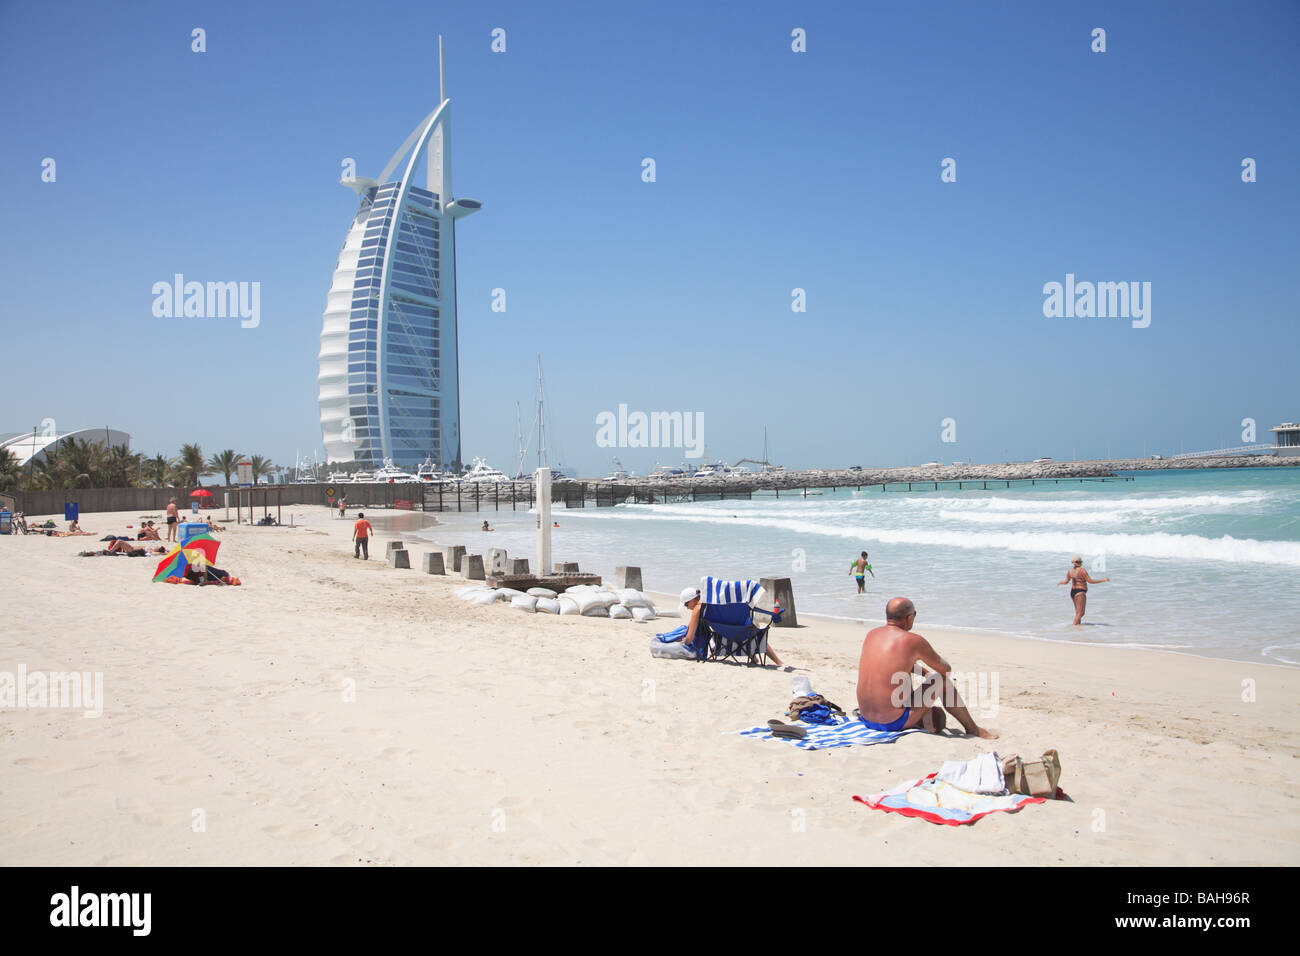 View of Burj Al Arab Hotel from public beach in Jumeirah Dubai United Arab Emirates Stock Photo